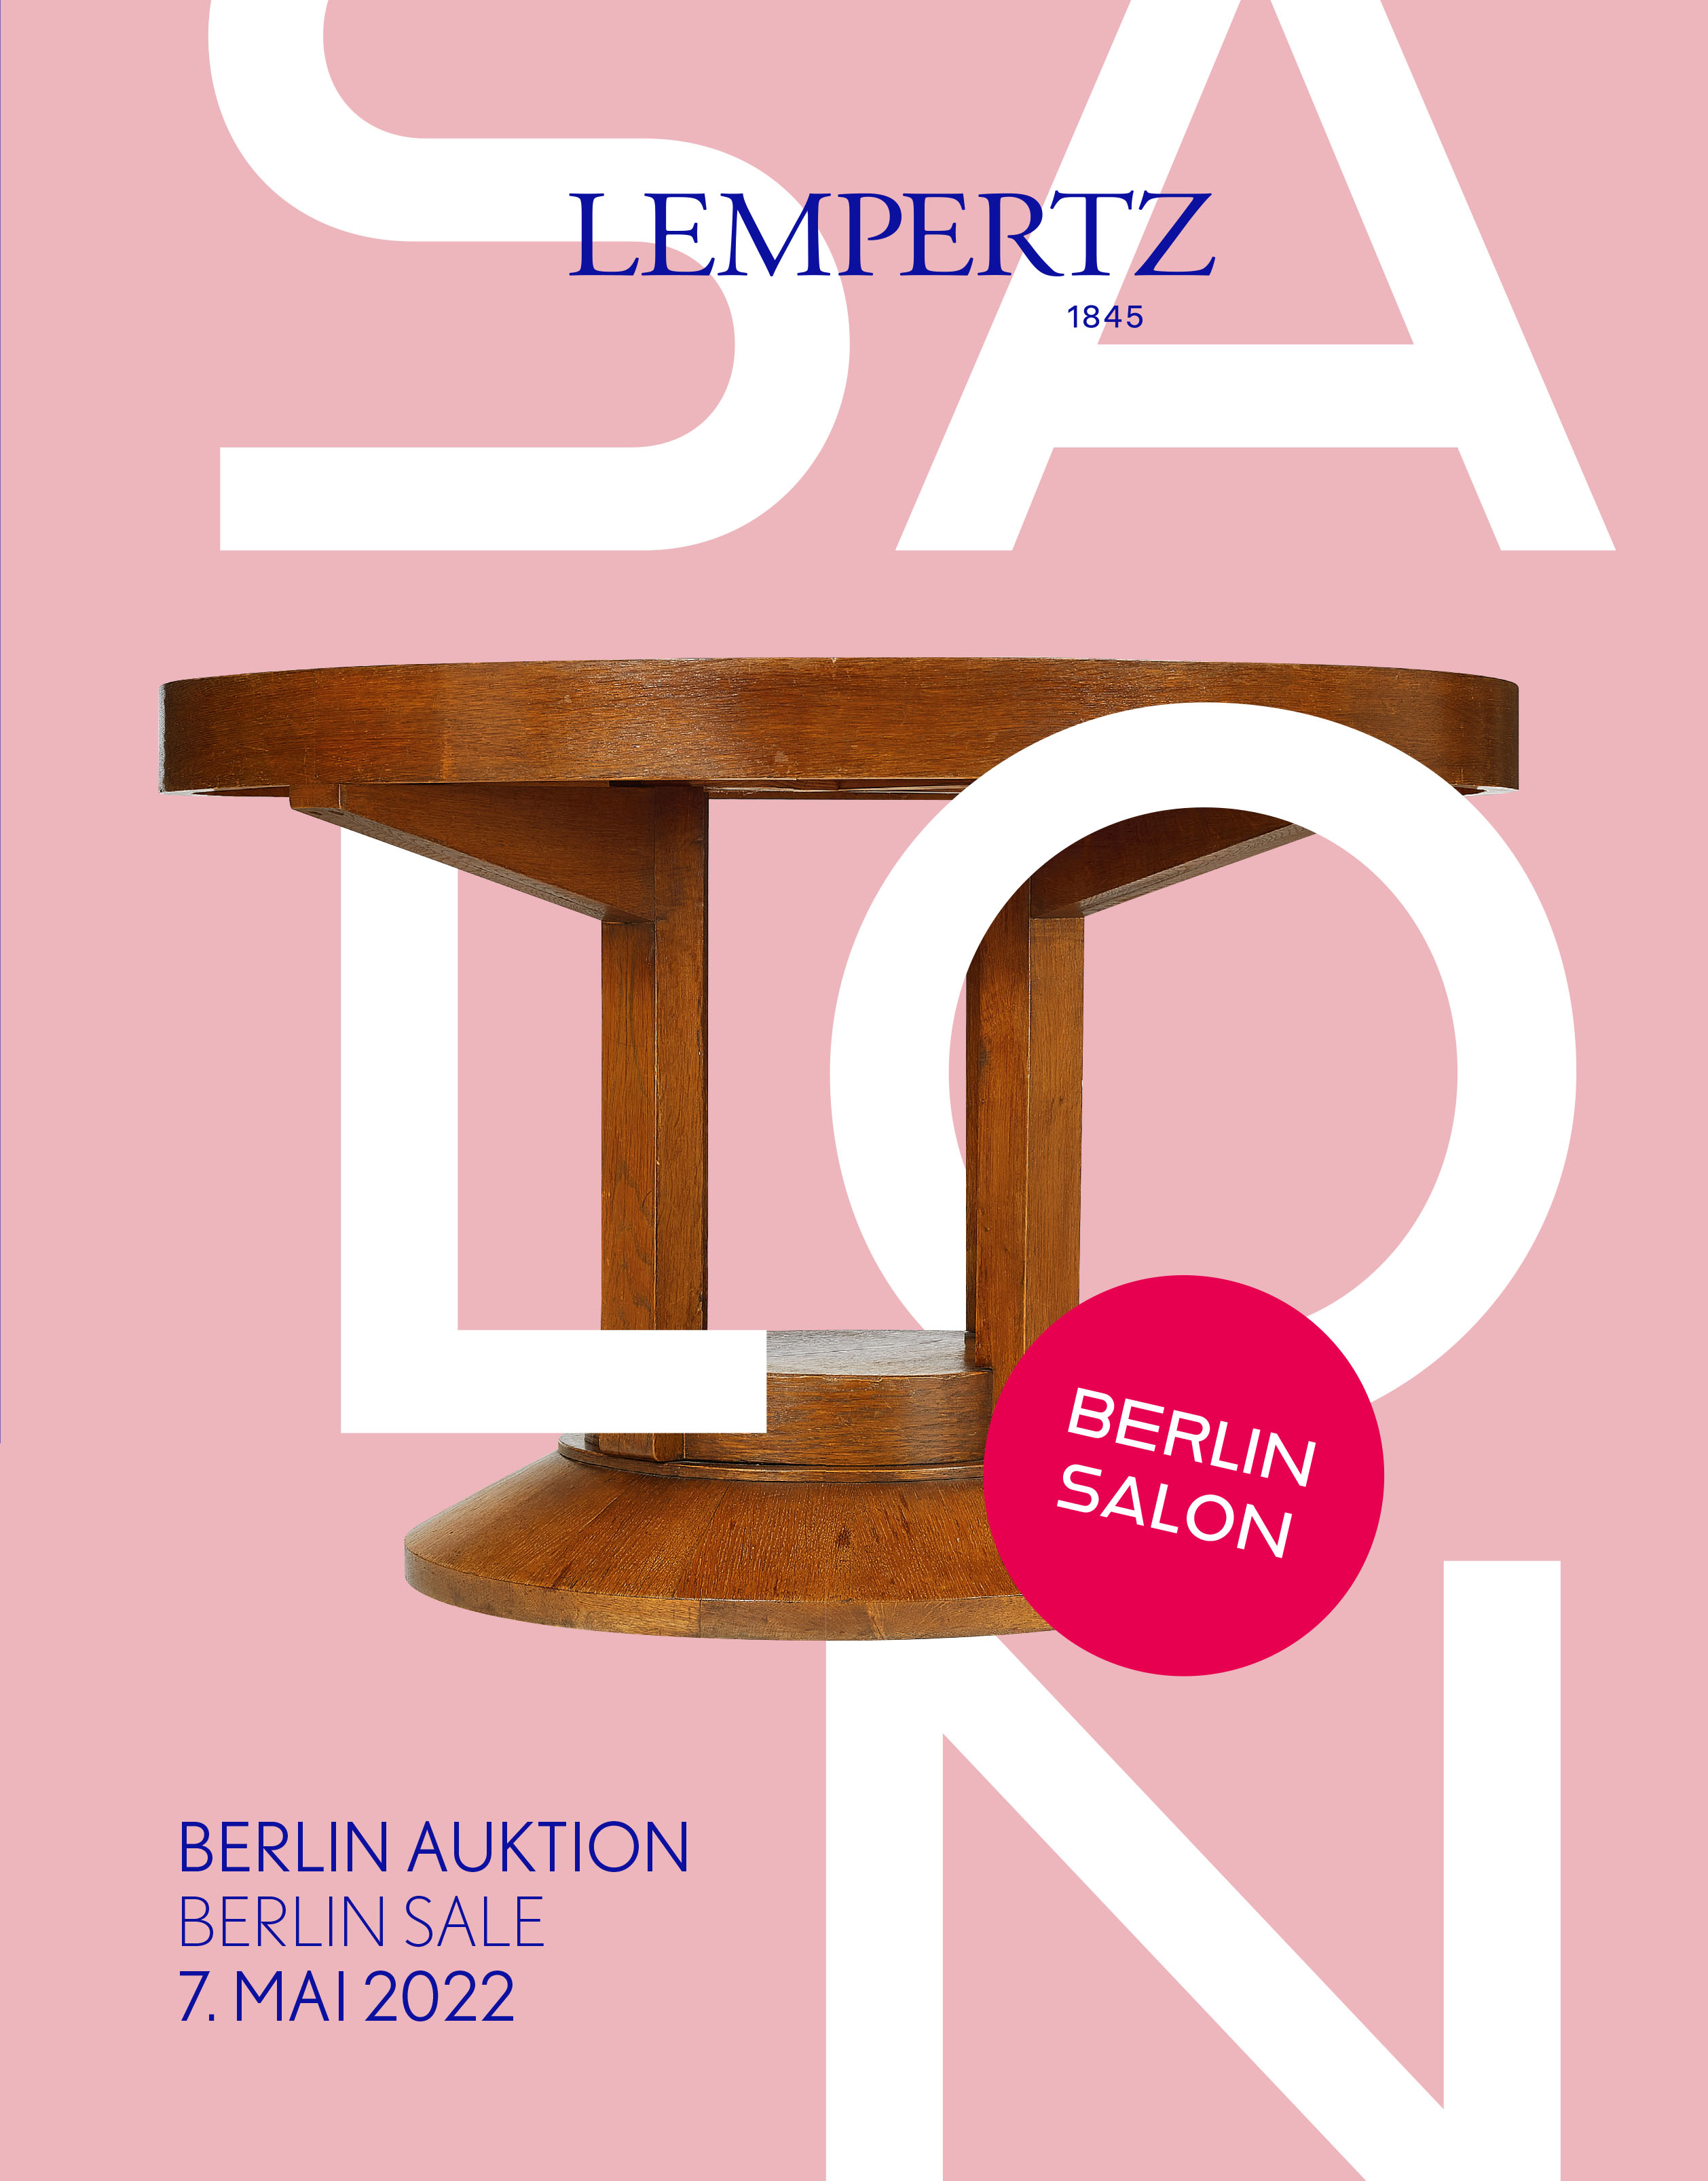 Auktionshaus - Berlin Auktion Salon - Auktionskatalog 1193 – Auktionshaus Lempertz